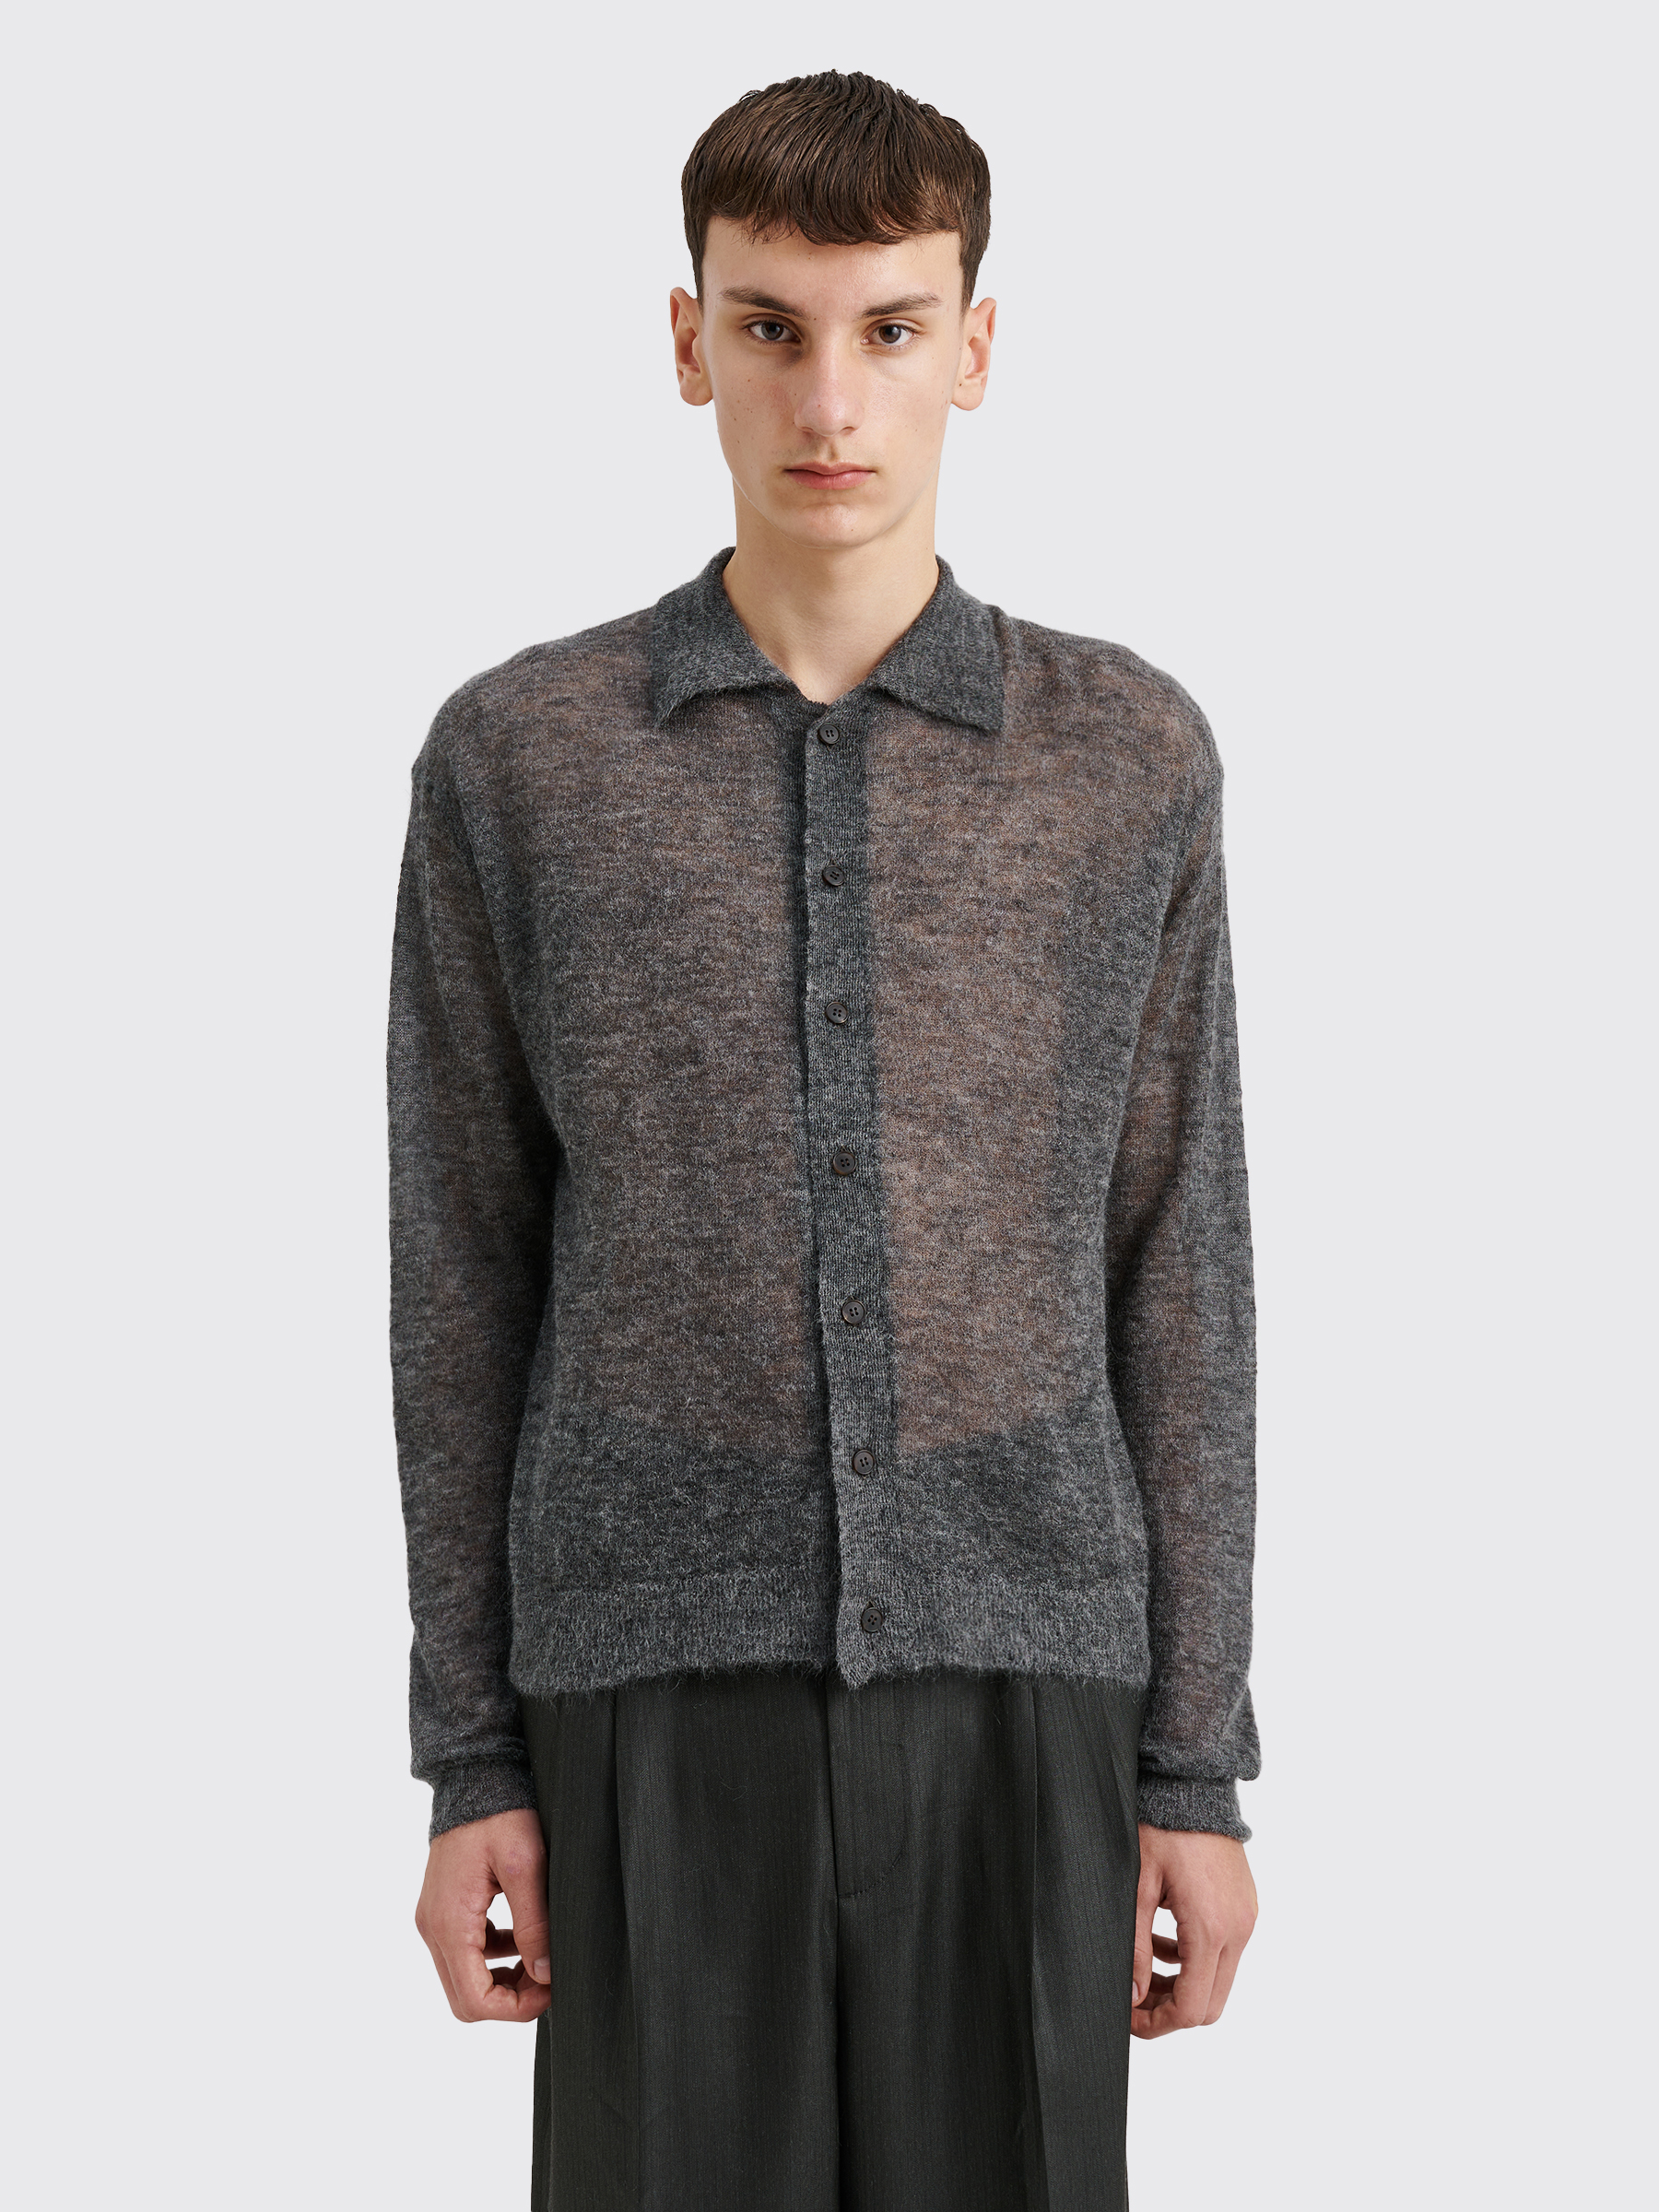 Très Bien - Auralee Mohair Sheer Knit Cardigan Top Charcoal